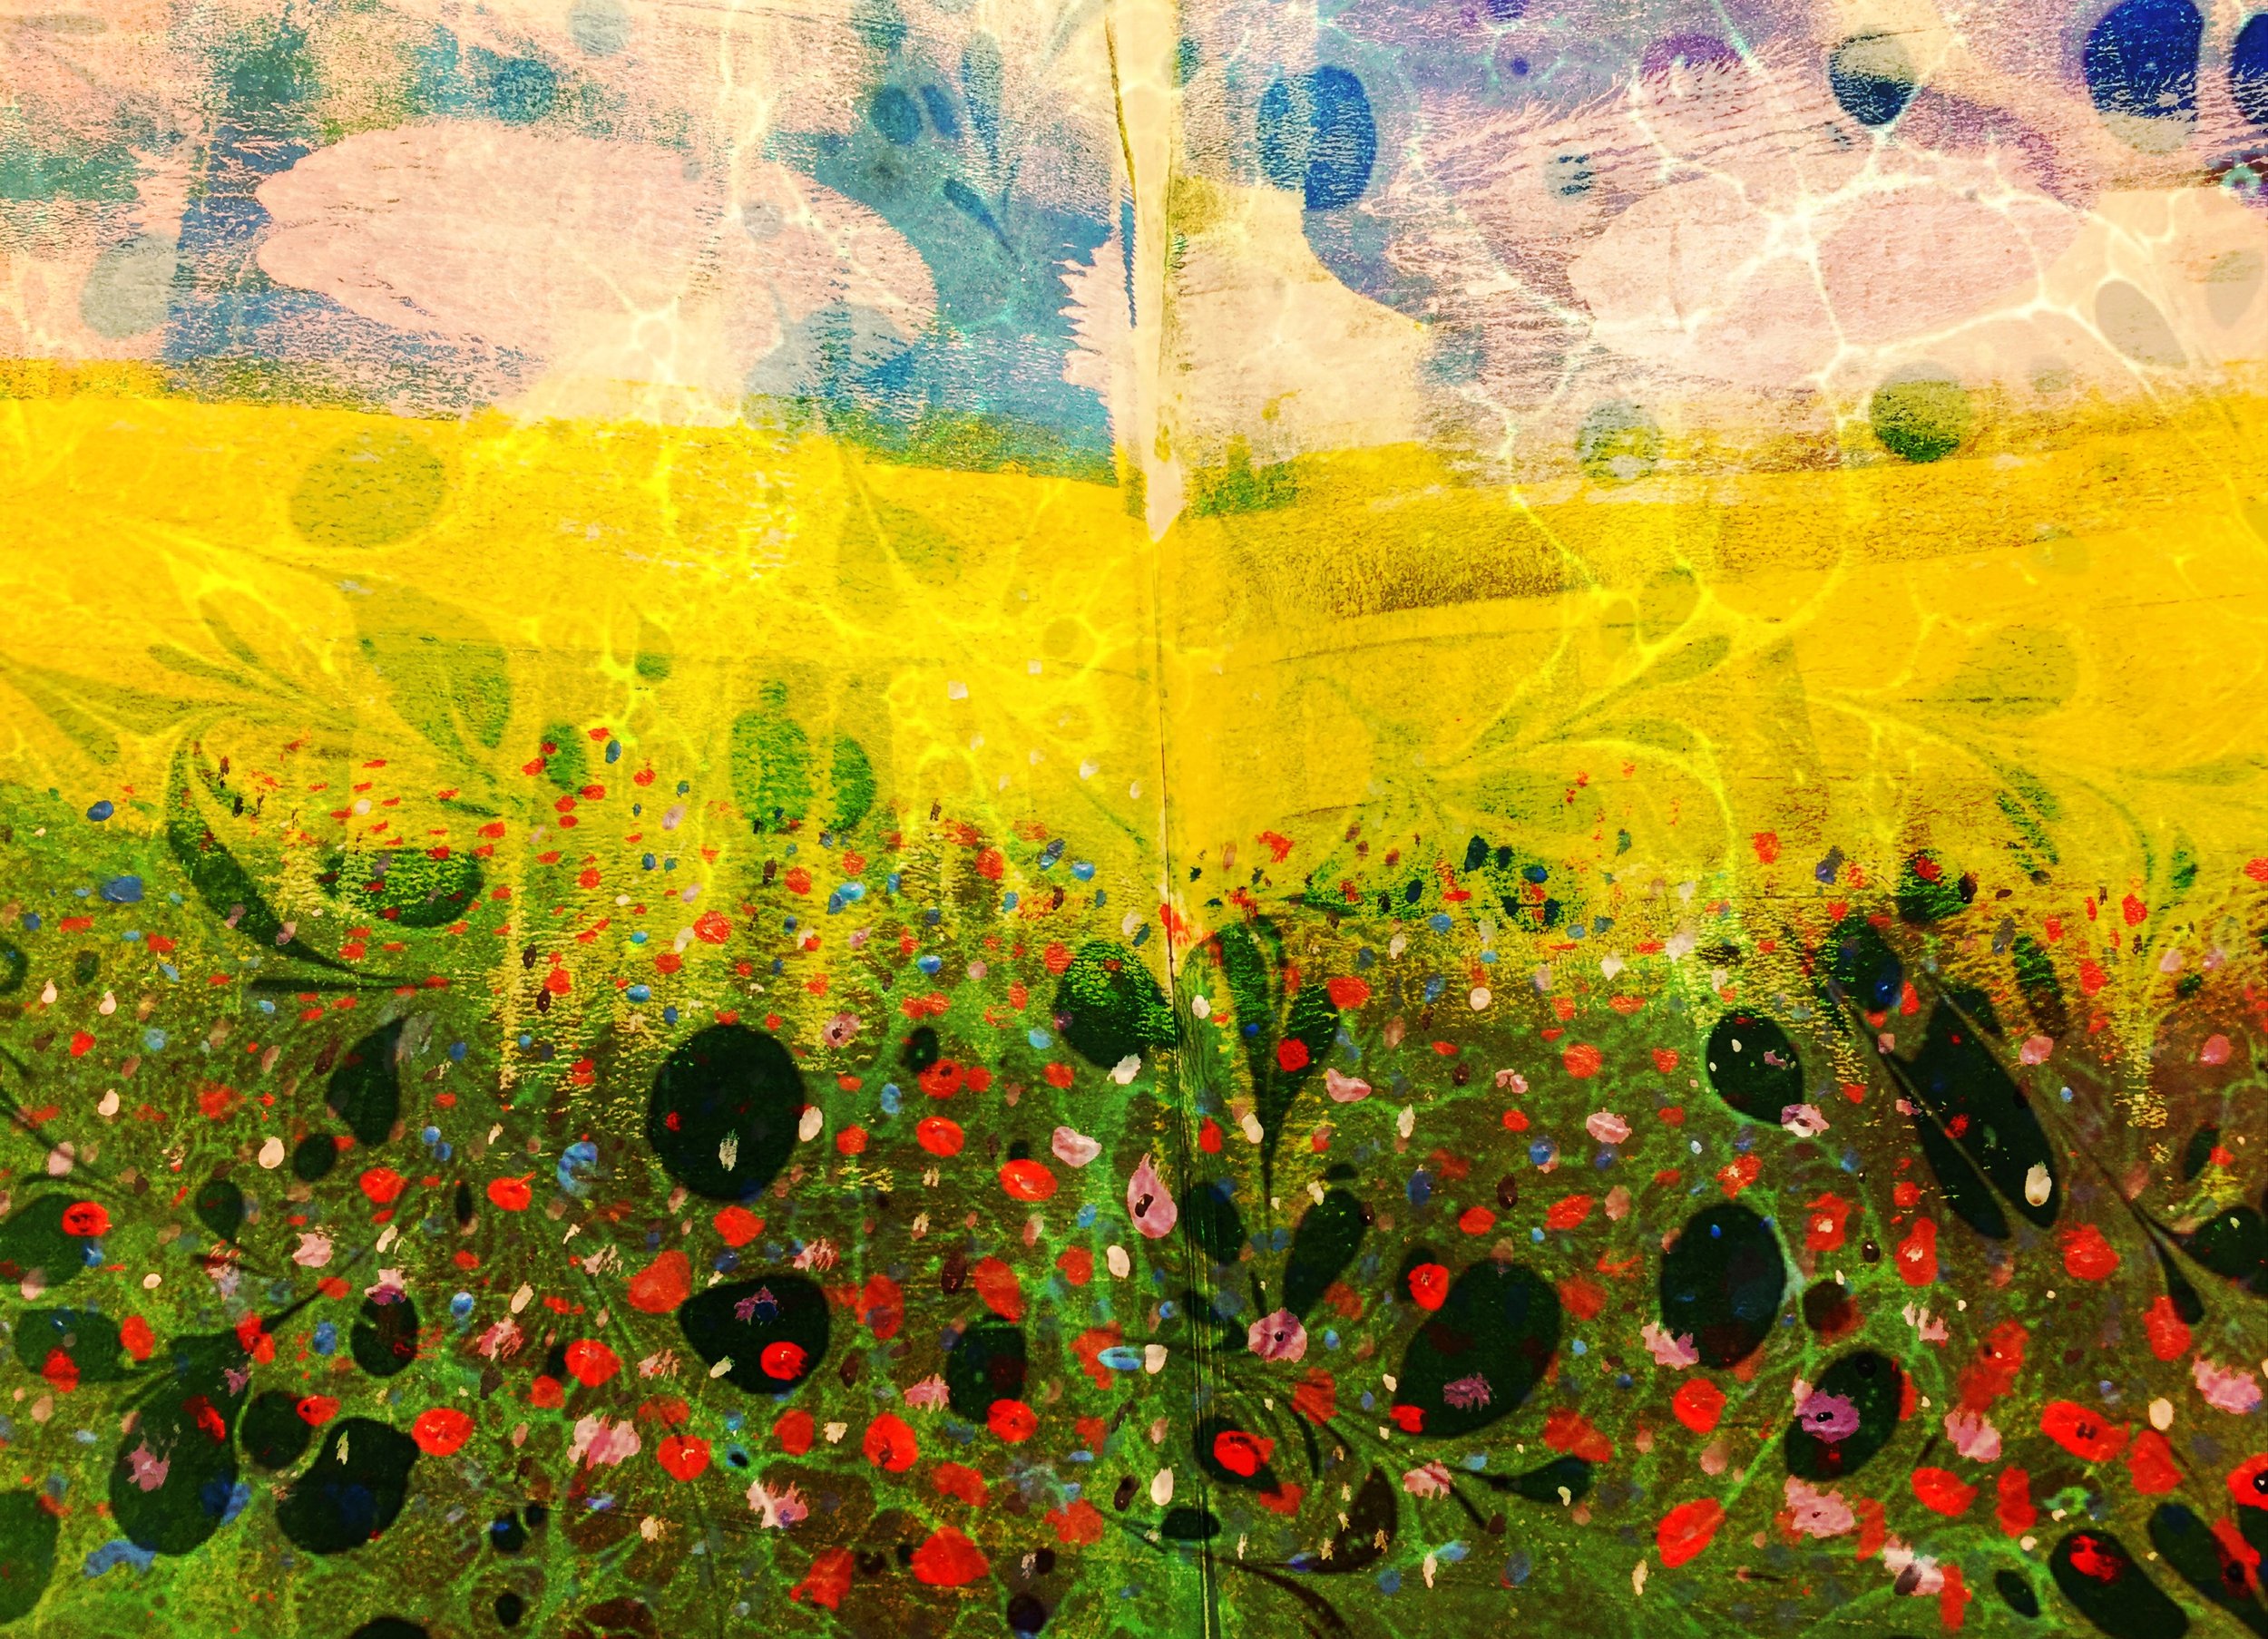 Wheat field with poppies-digital blend version.JPG